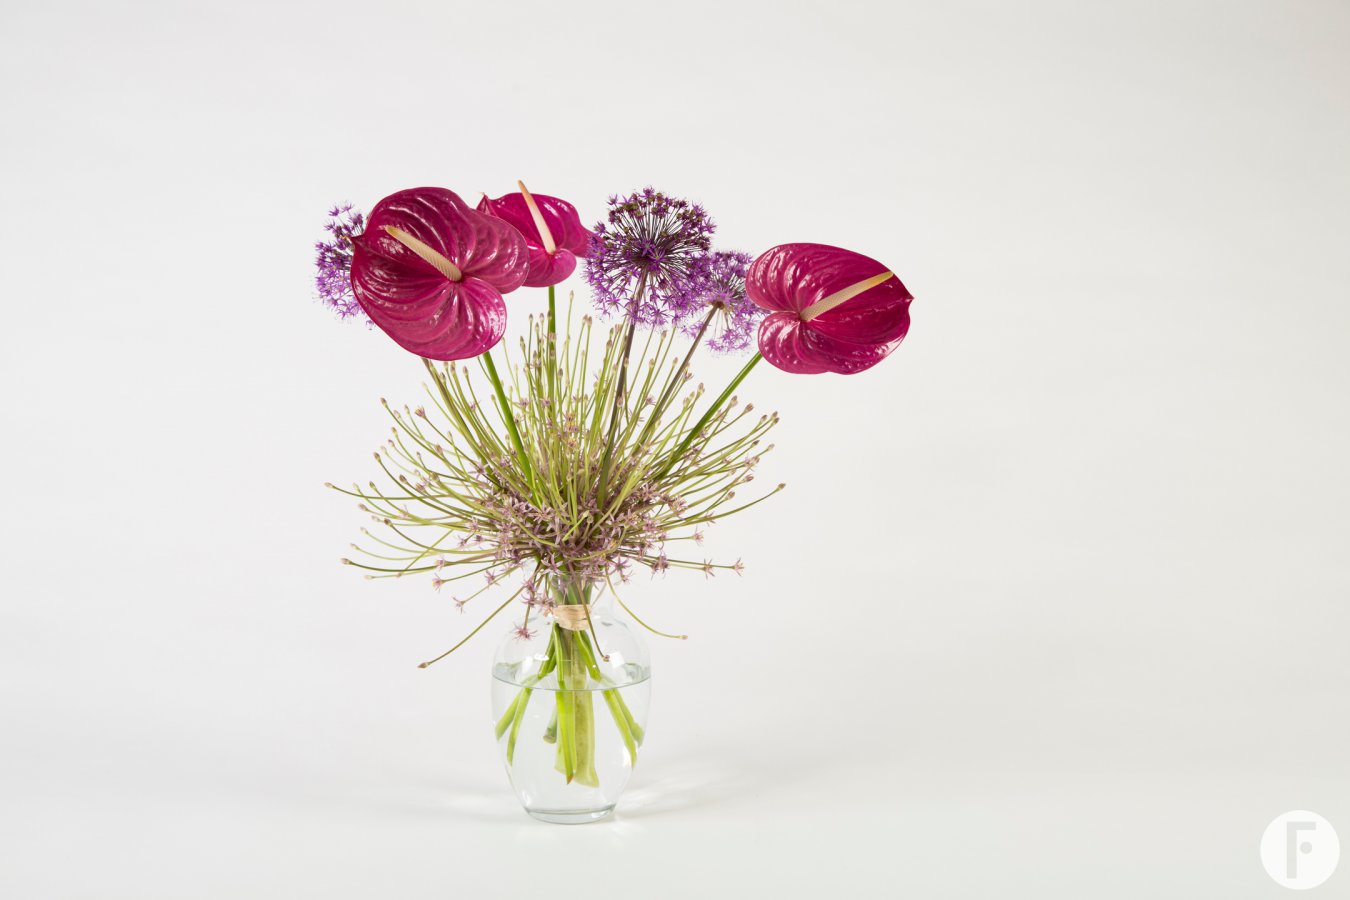 Making a bouquet using cut Anthurium flowers: tips & inspiration